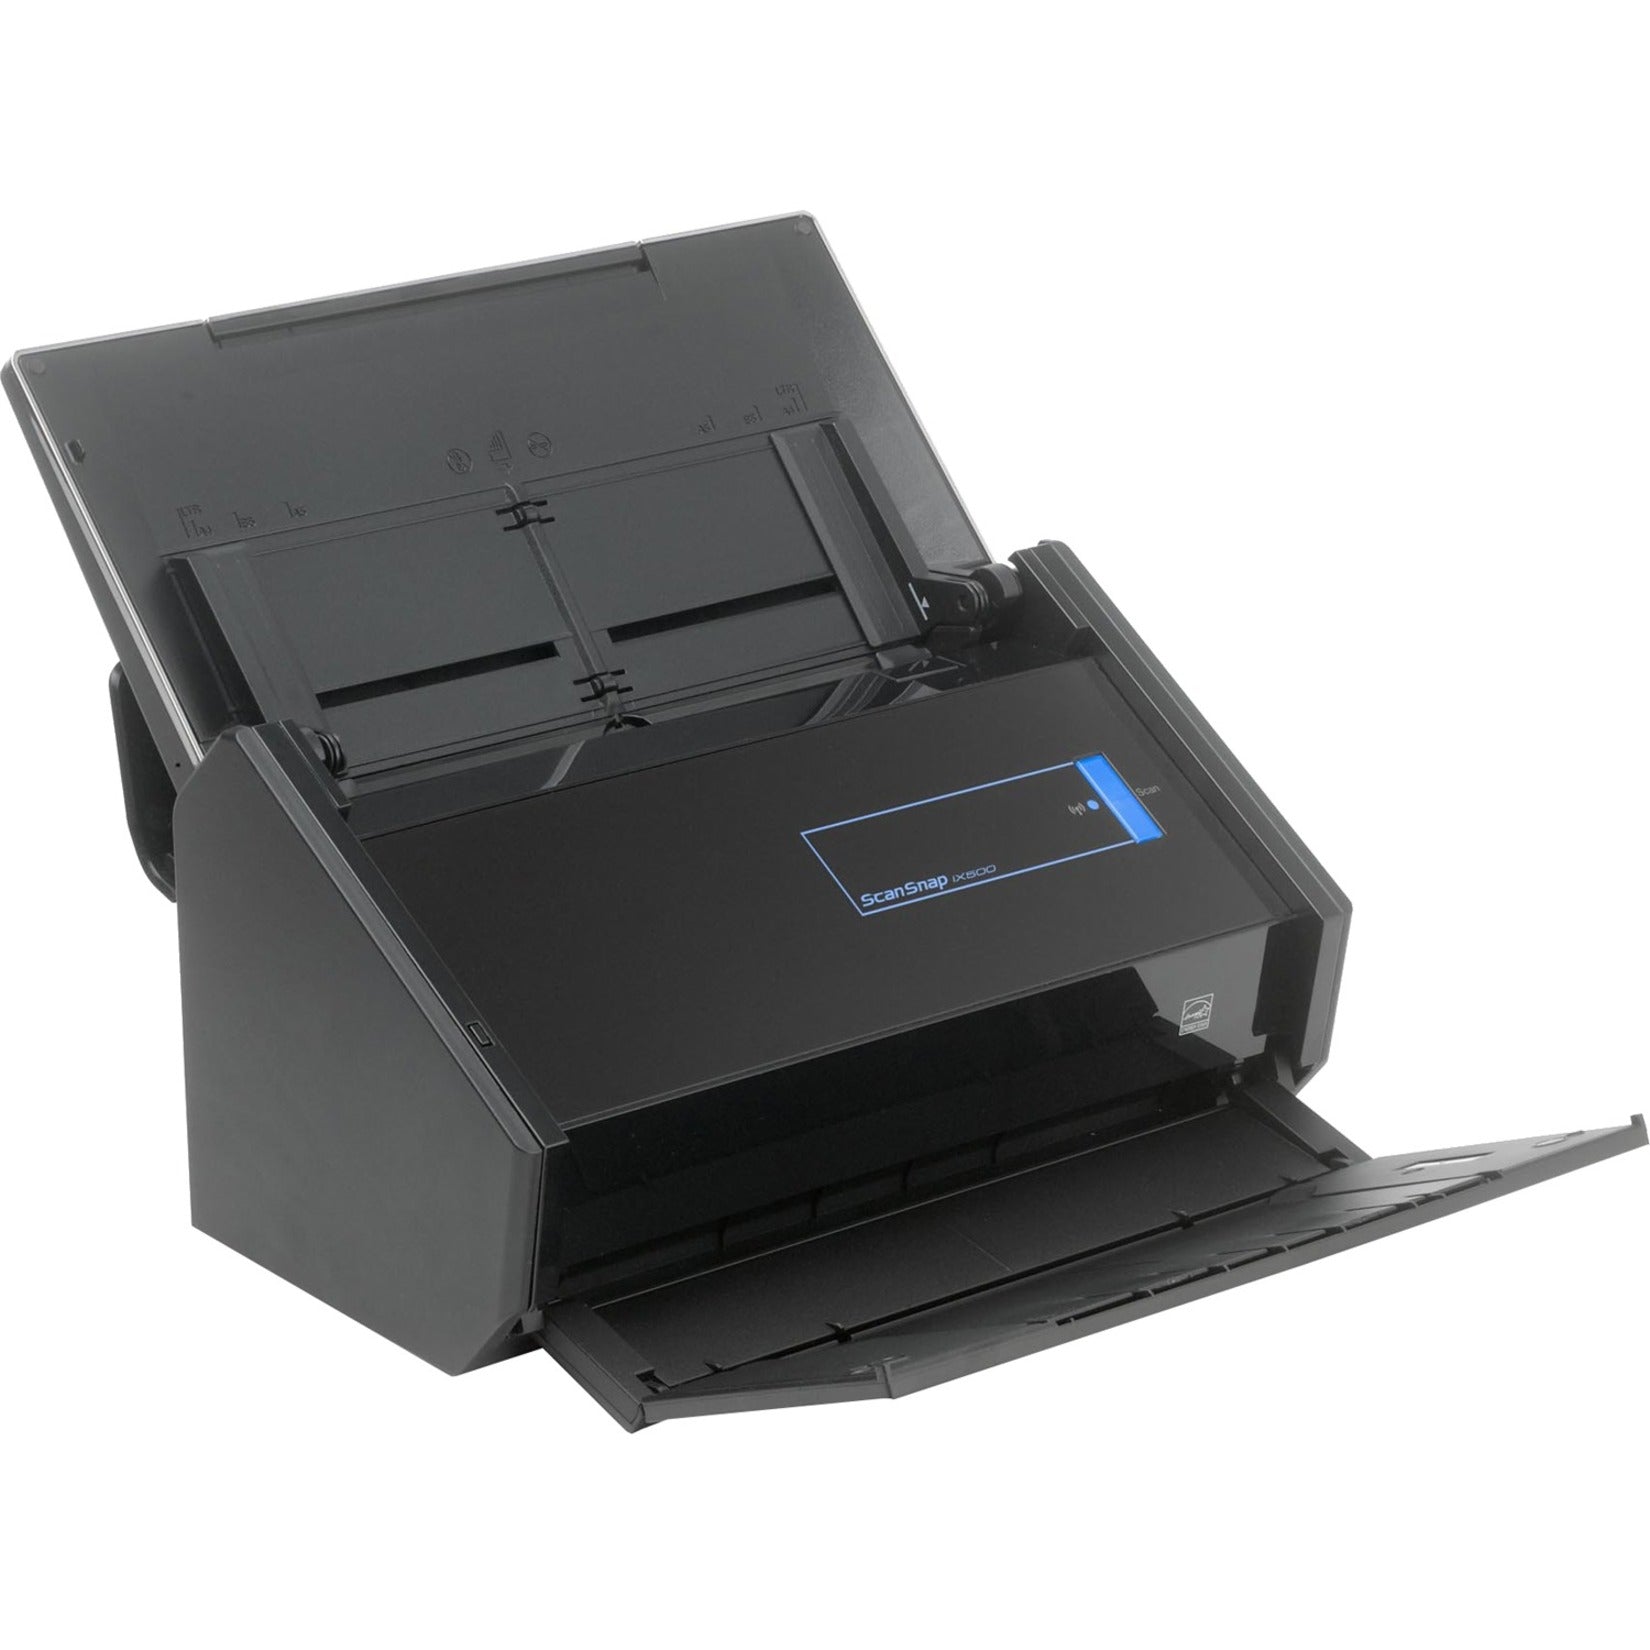 Fujitsu PA03656-B305 ScanSnap iX500 Color Duplex Desk Scanner, PC and Mac Compatible, 50 Sheet ADF Capacity